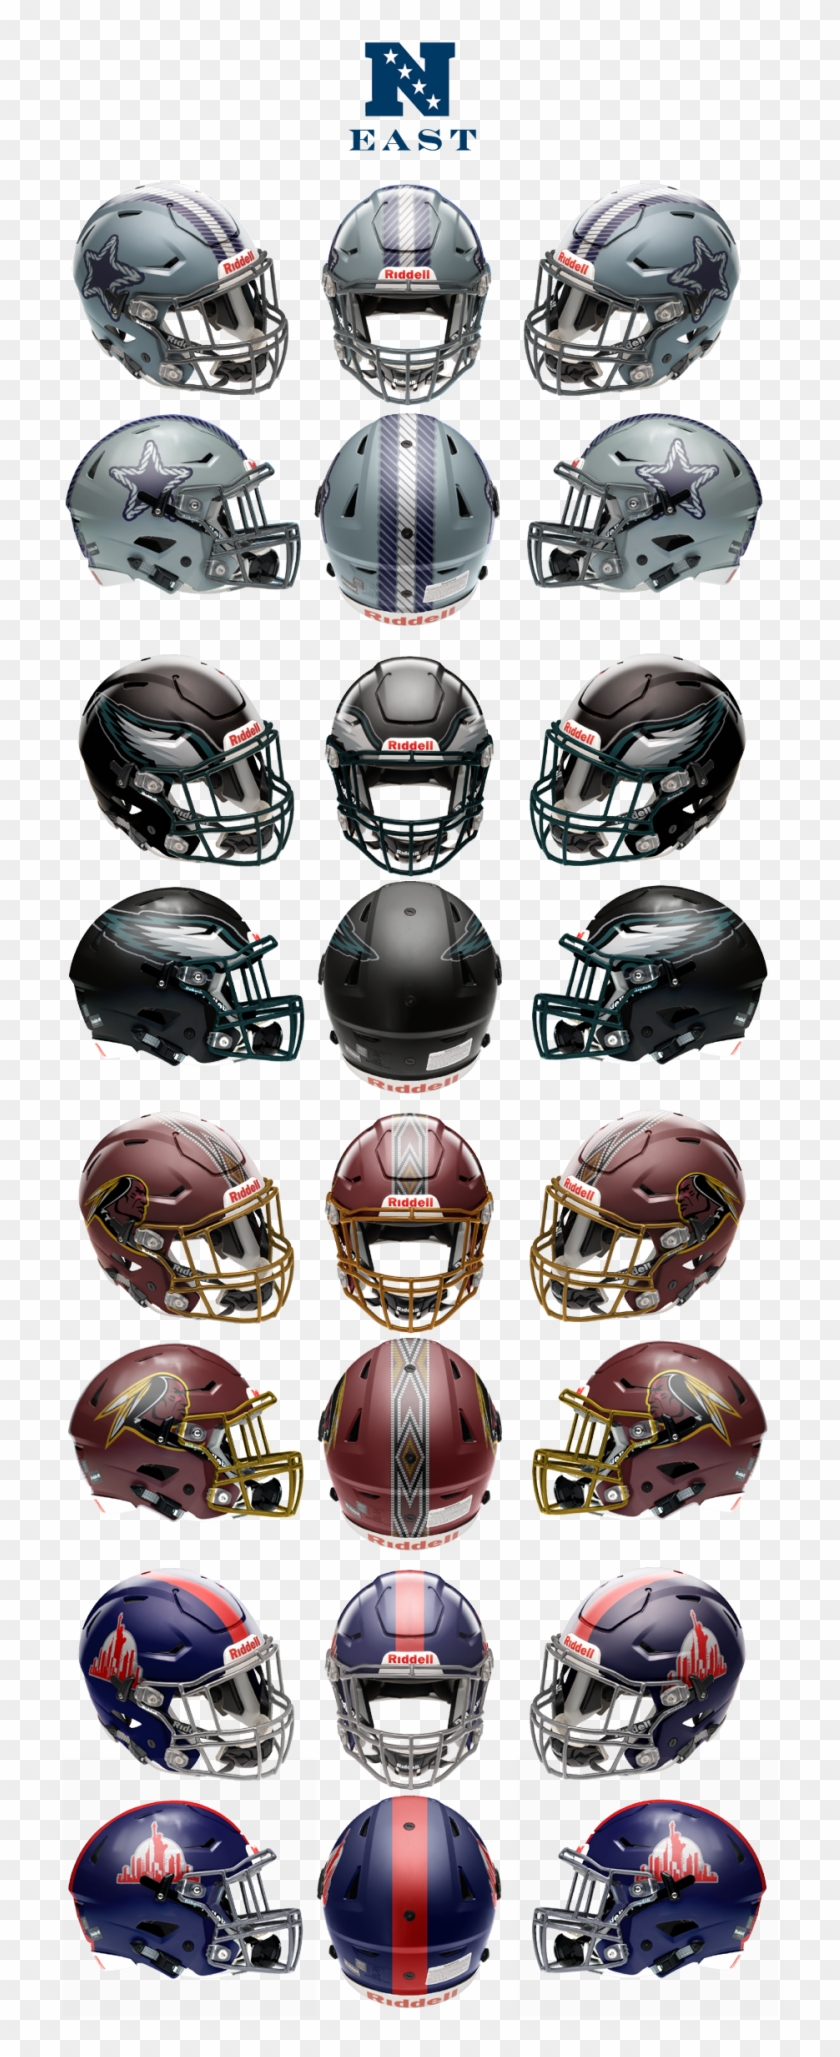 Thumb - Charlotte 49ers Football Helmet Clipart #4005223